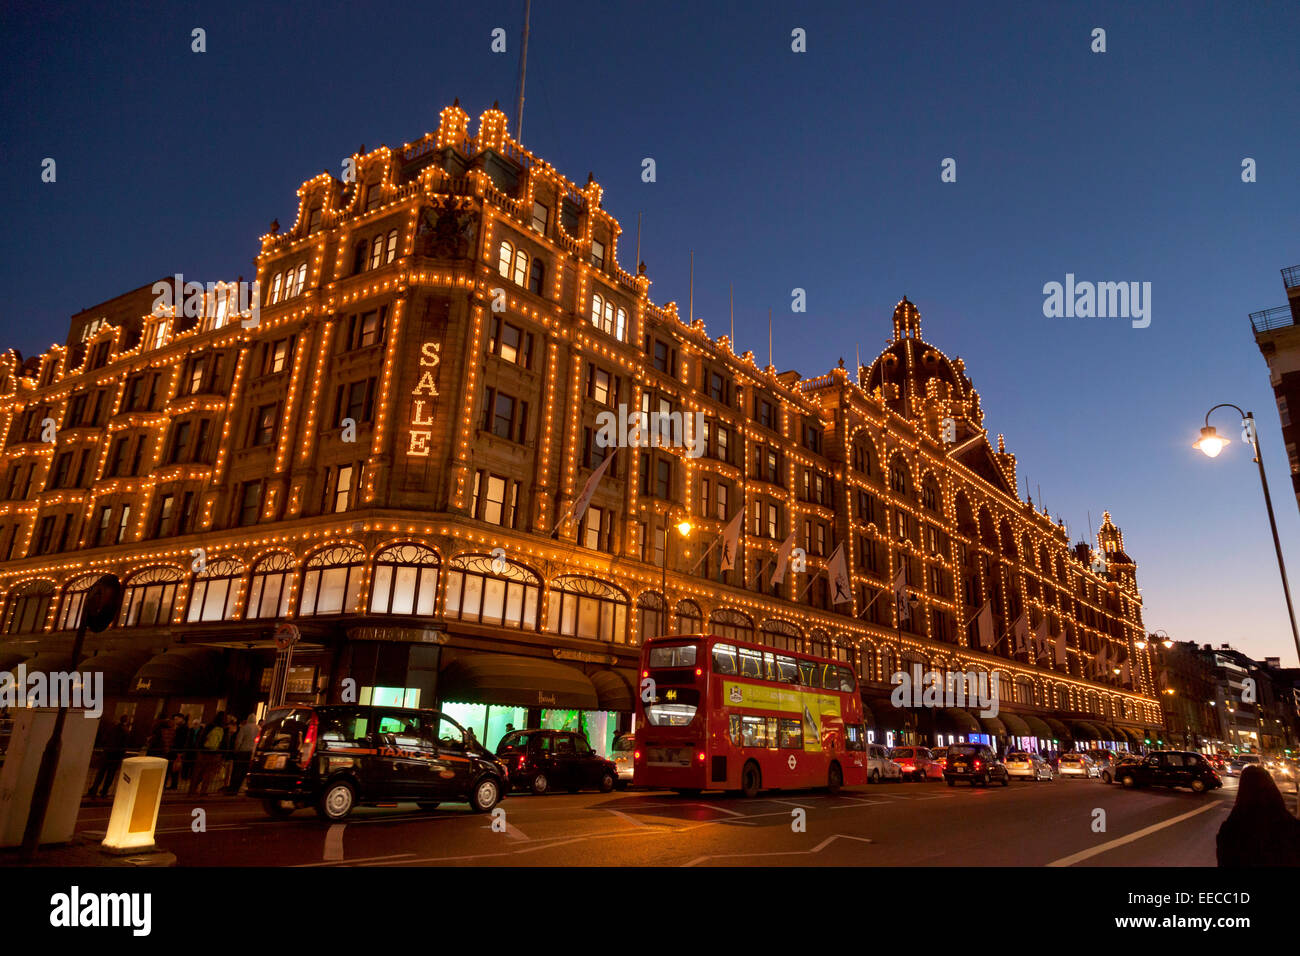 Harrods Department Store at night, Knightsbridge, London England UK Stock Photo